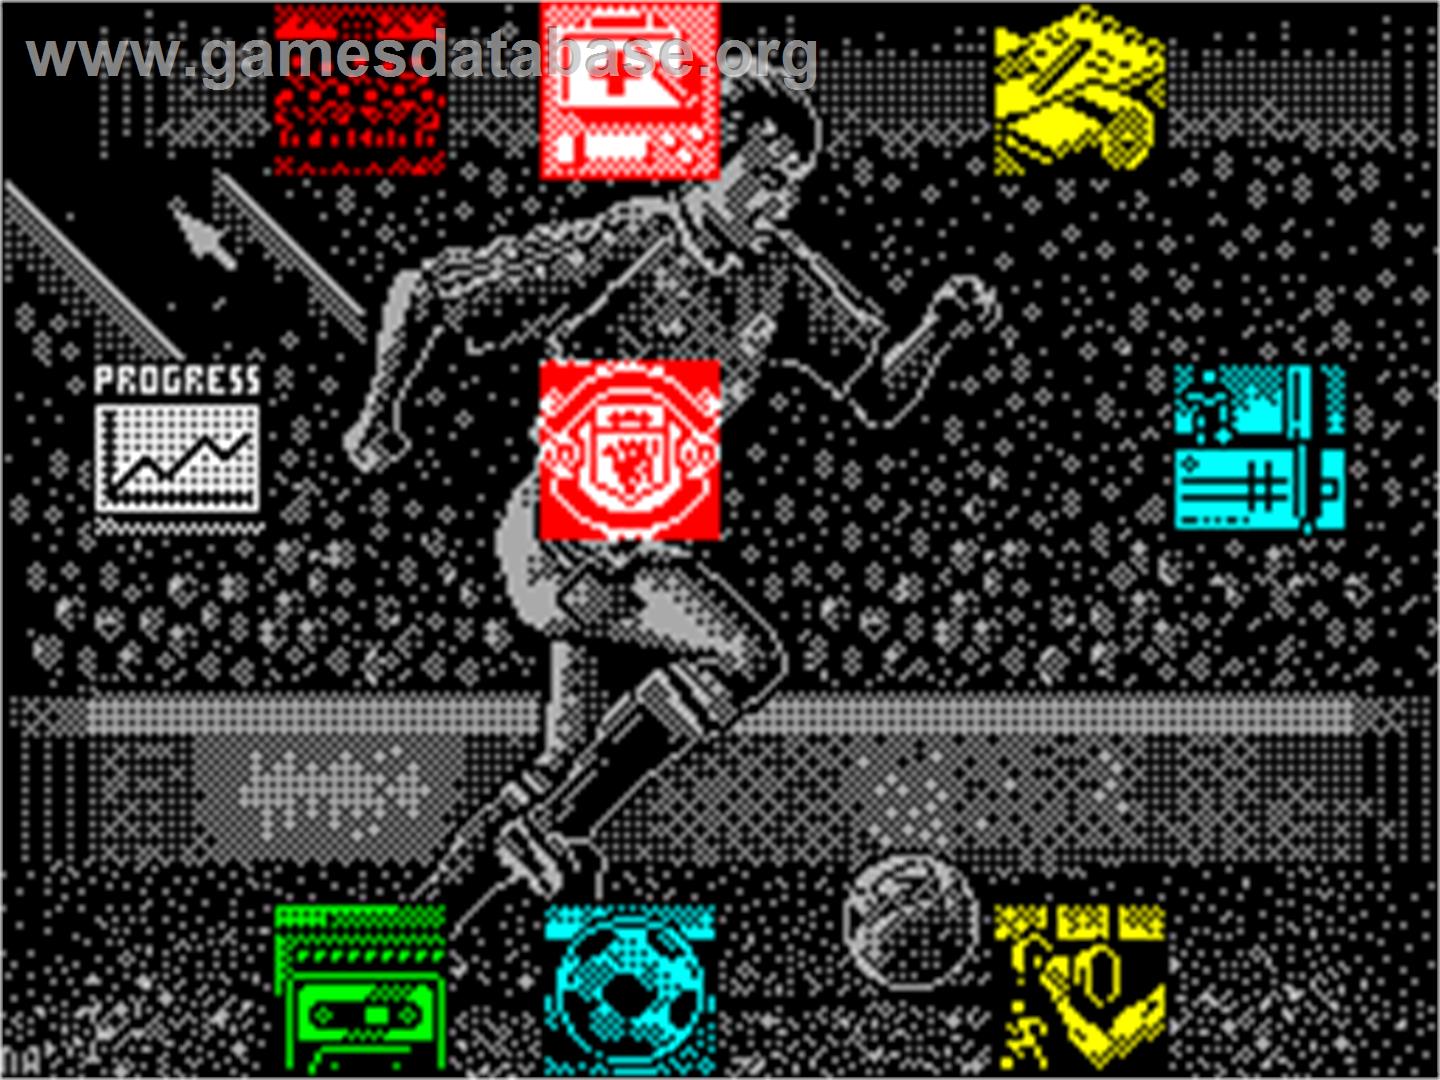 Manchester United - Sinclair ZX Spectrum - Artwork - In Game